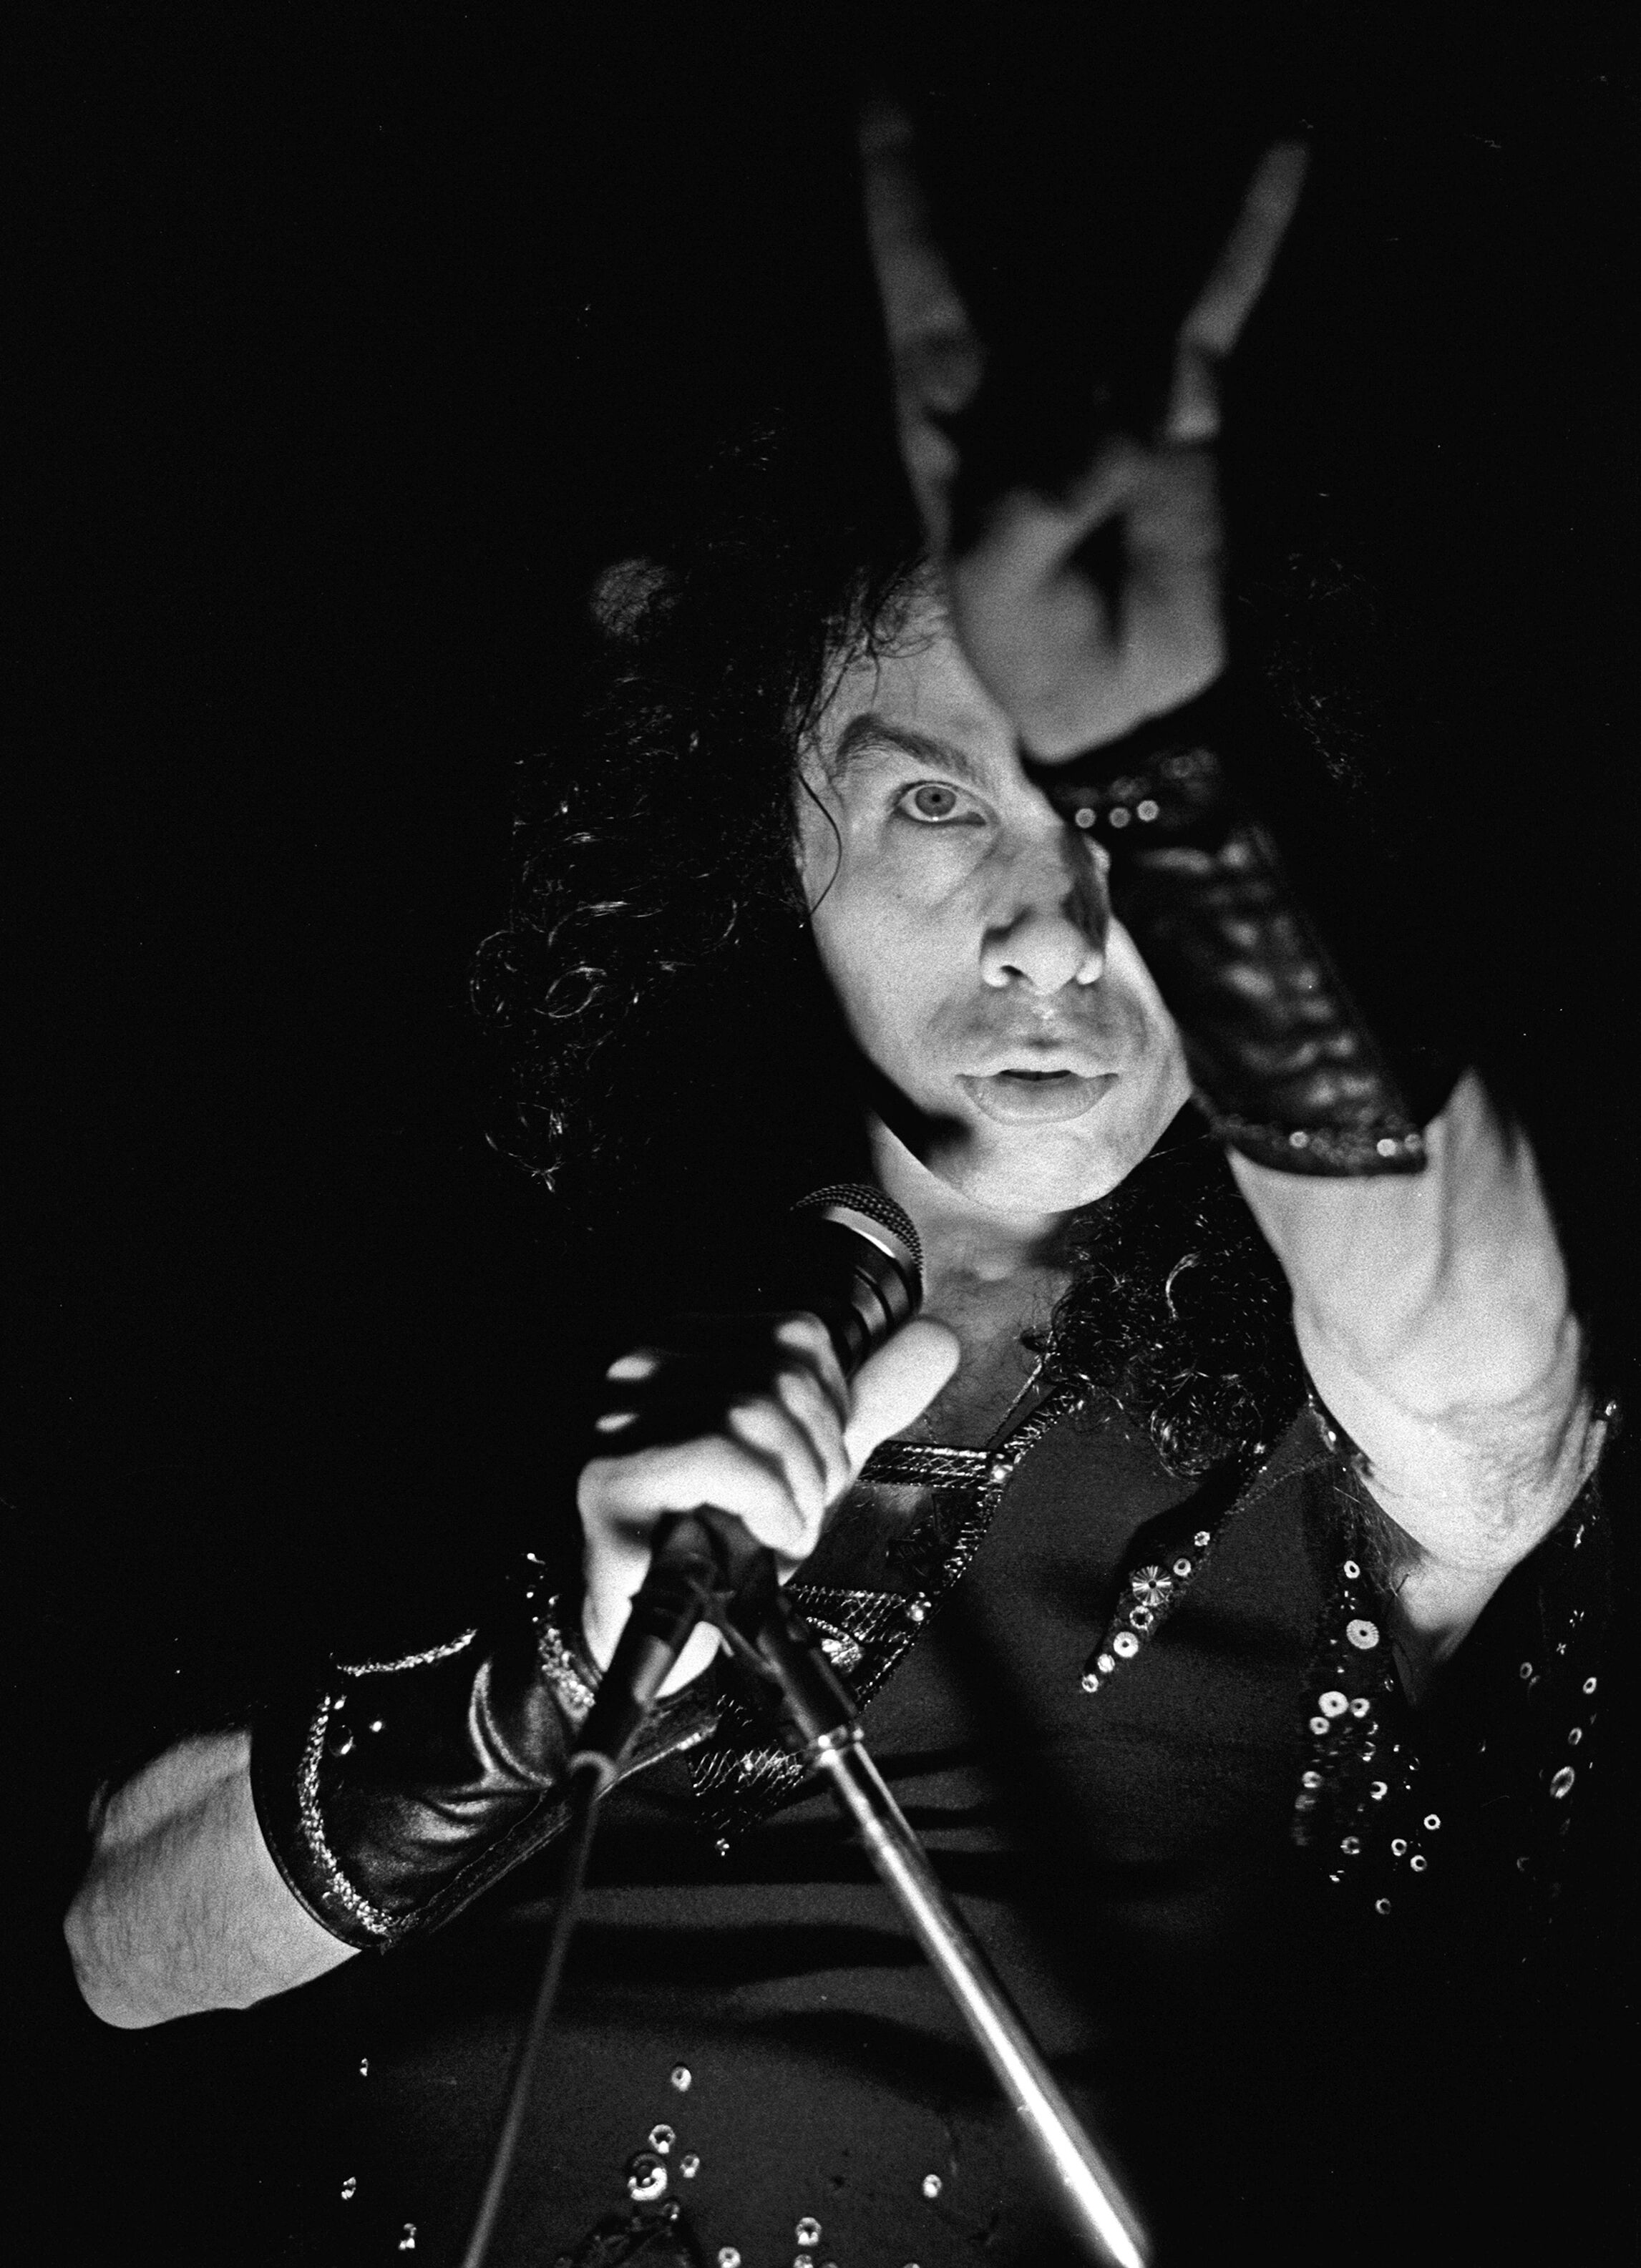 Ronnie James Dio - Wikipedia